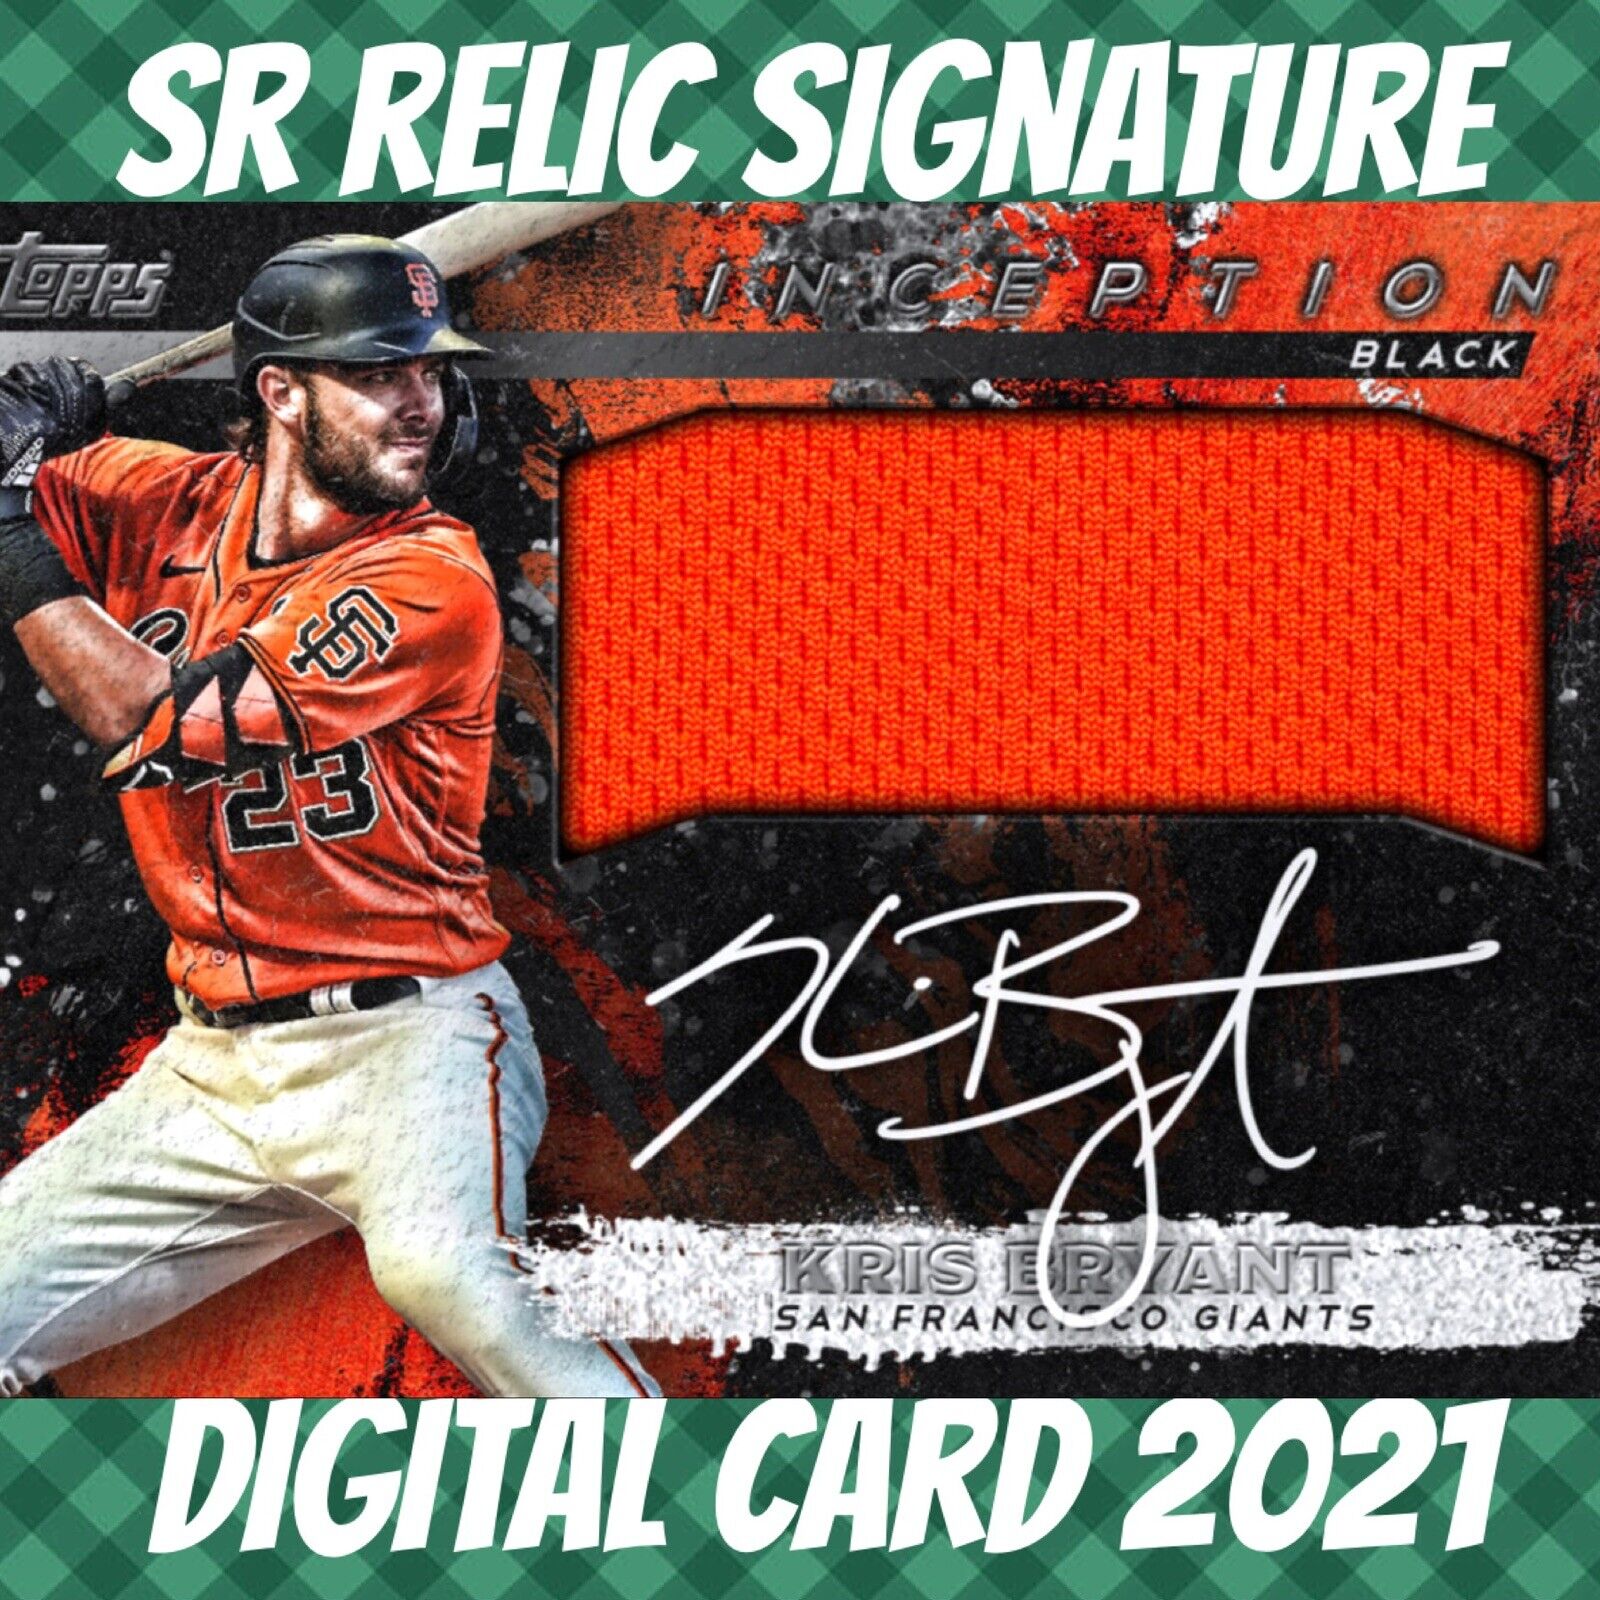 2021 Topps Bunt 21 SR Kris Bryant Inception Black Signature Relic Digital Card